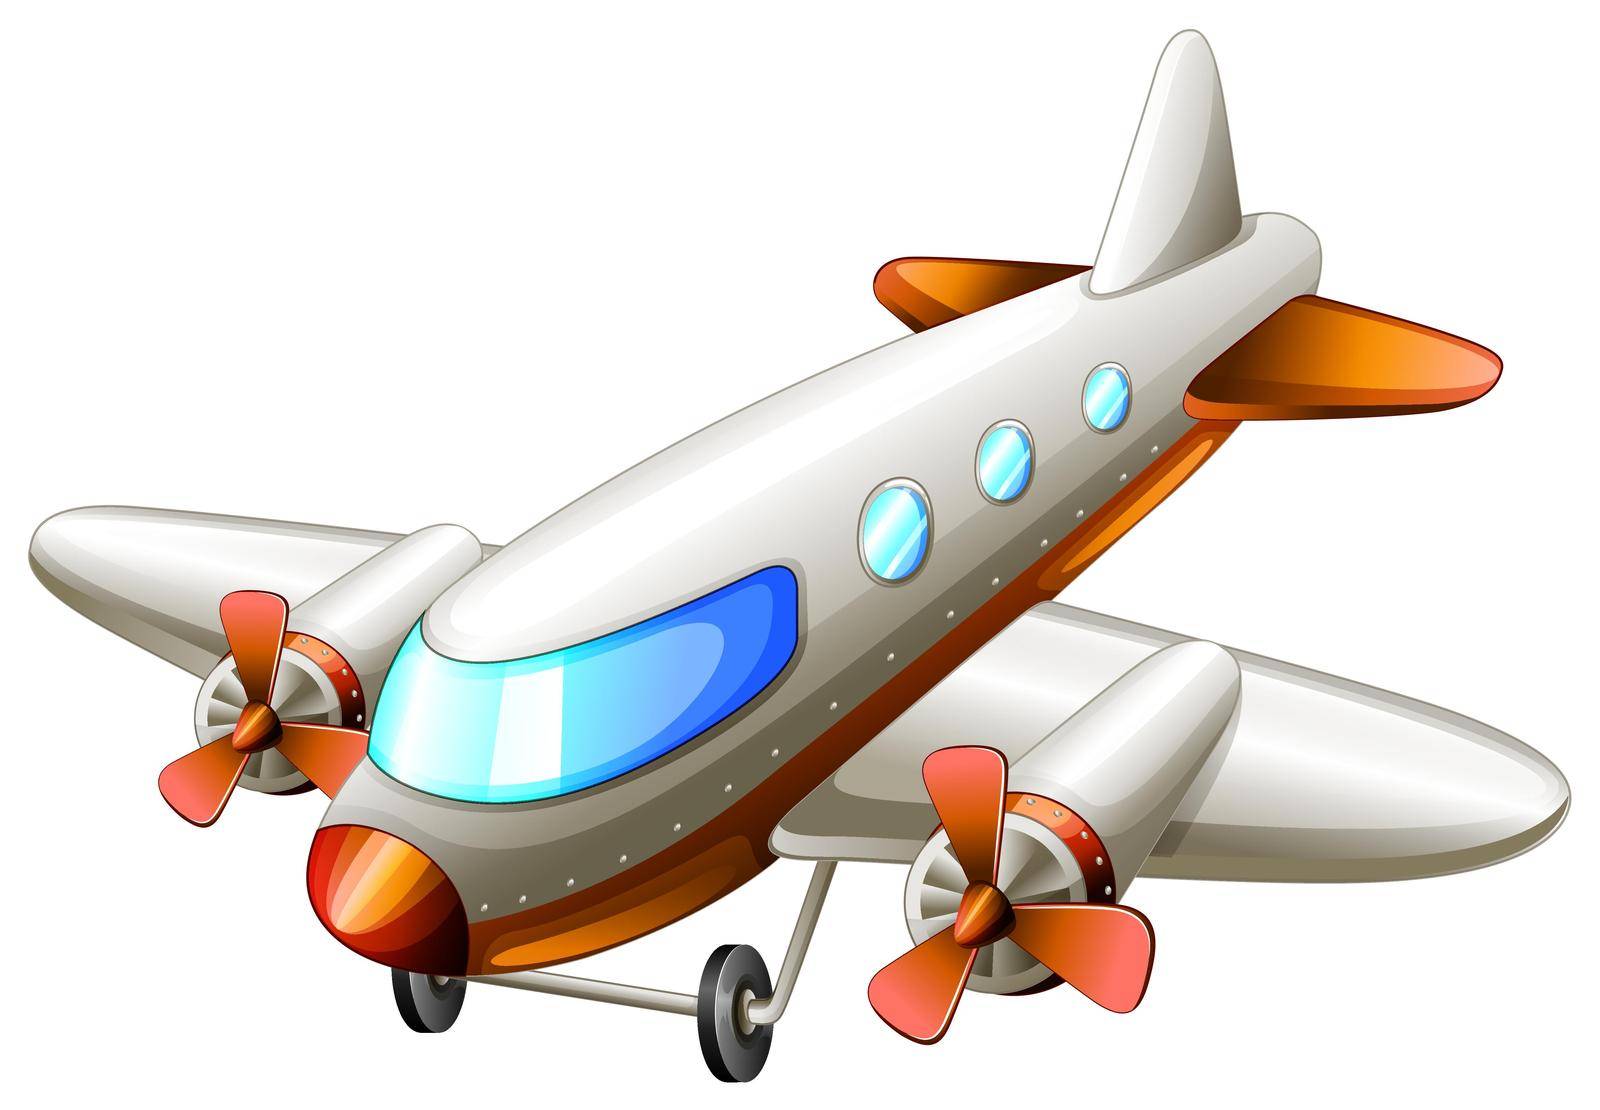 Illustration of a vintage plane on a white background